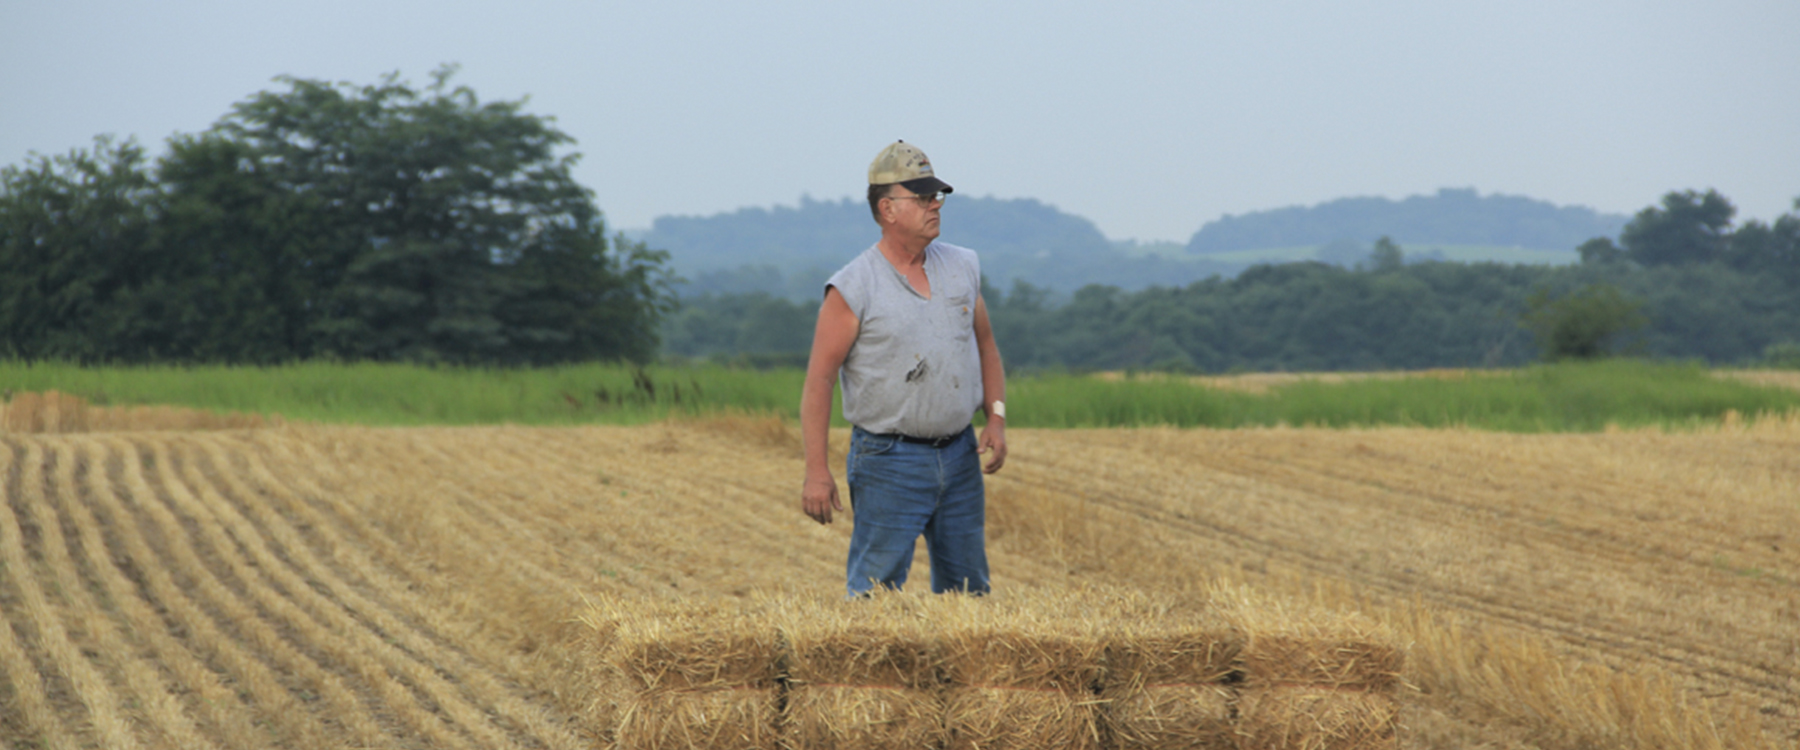 man standing in straw field